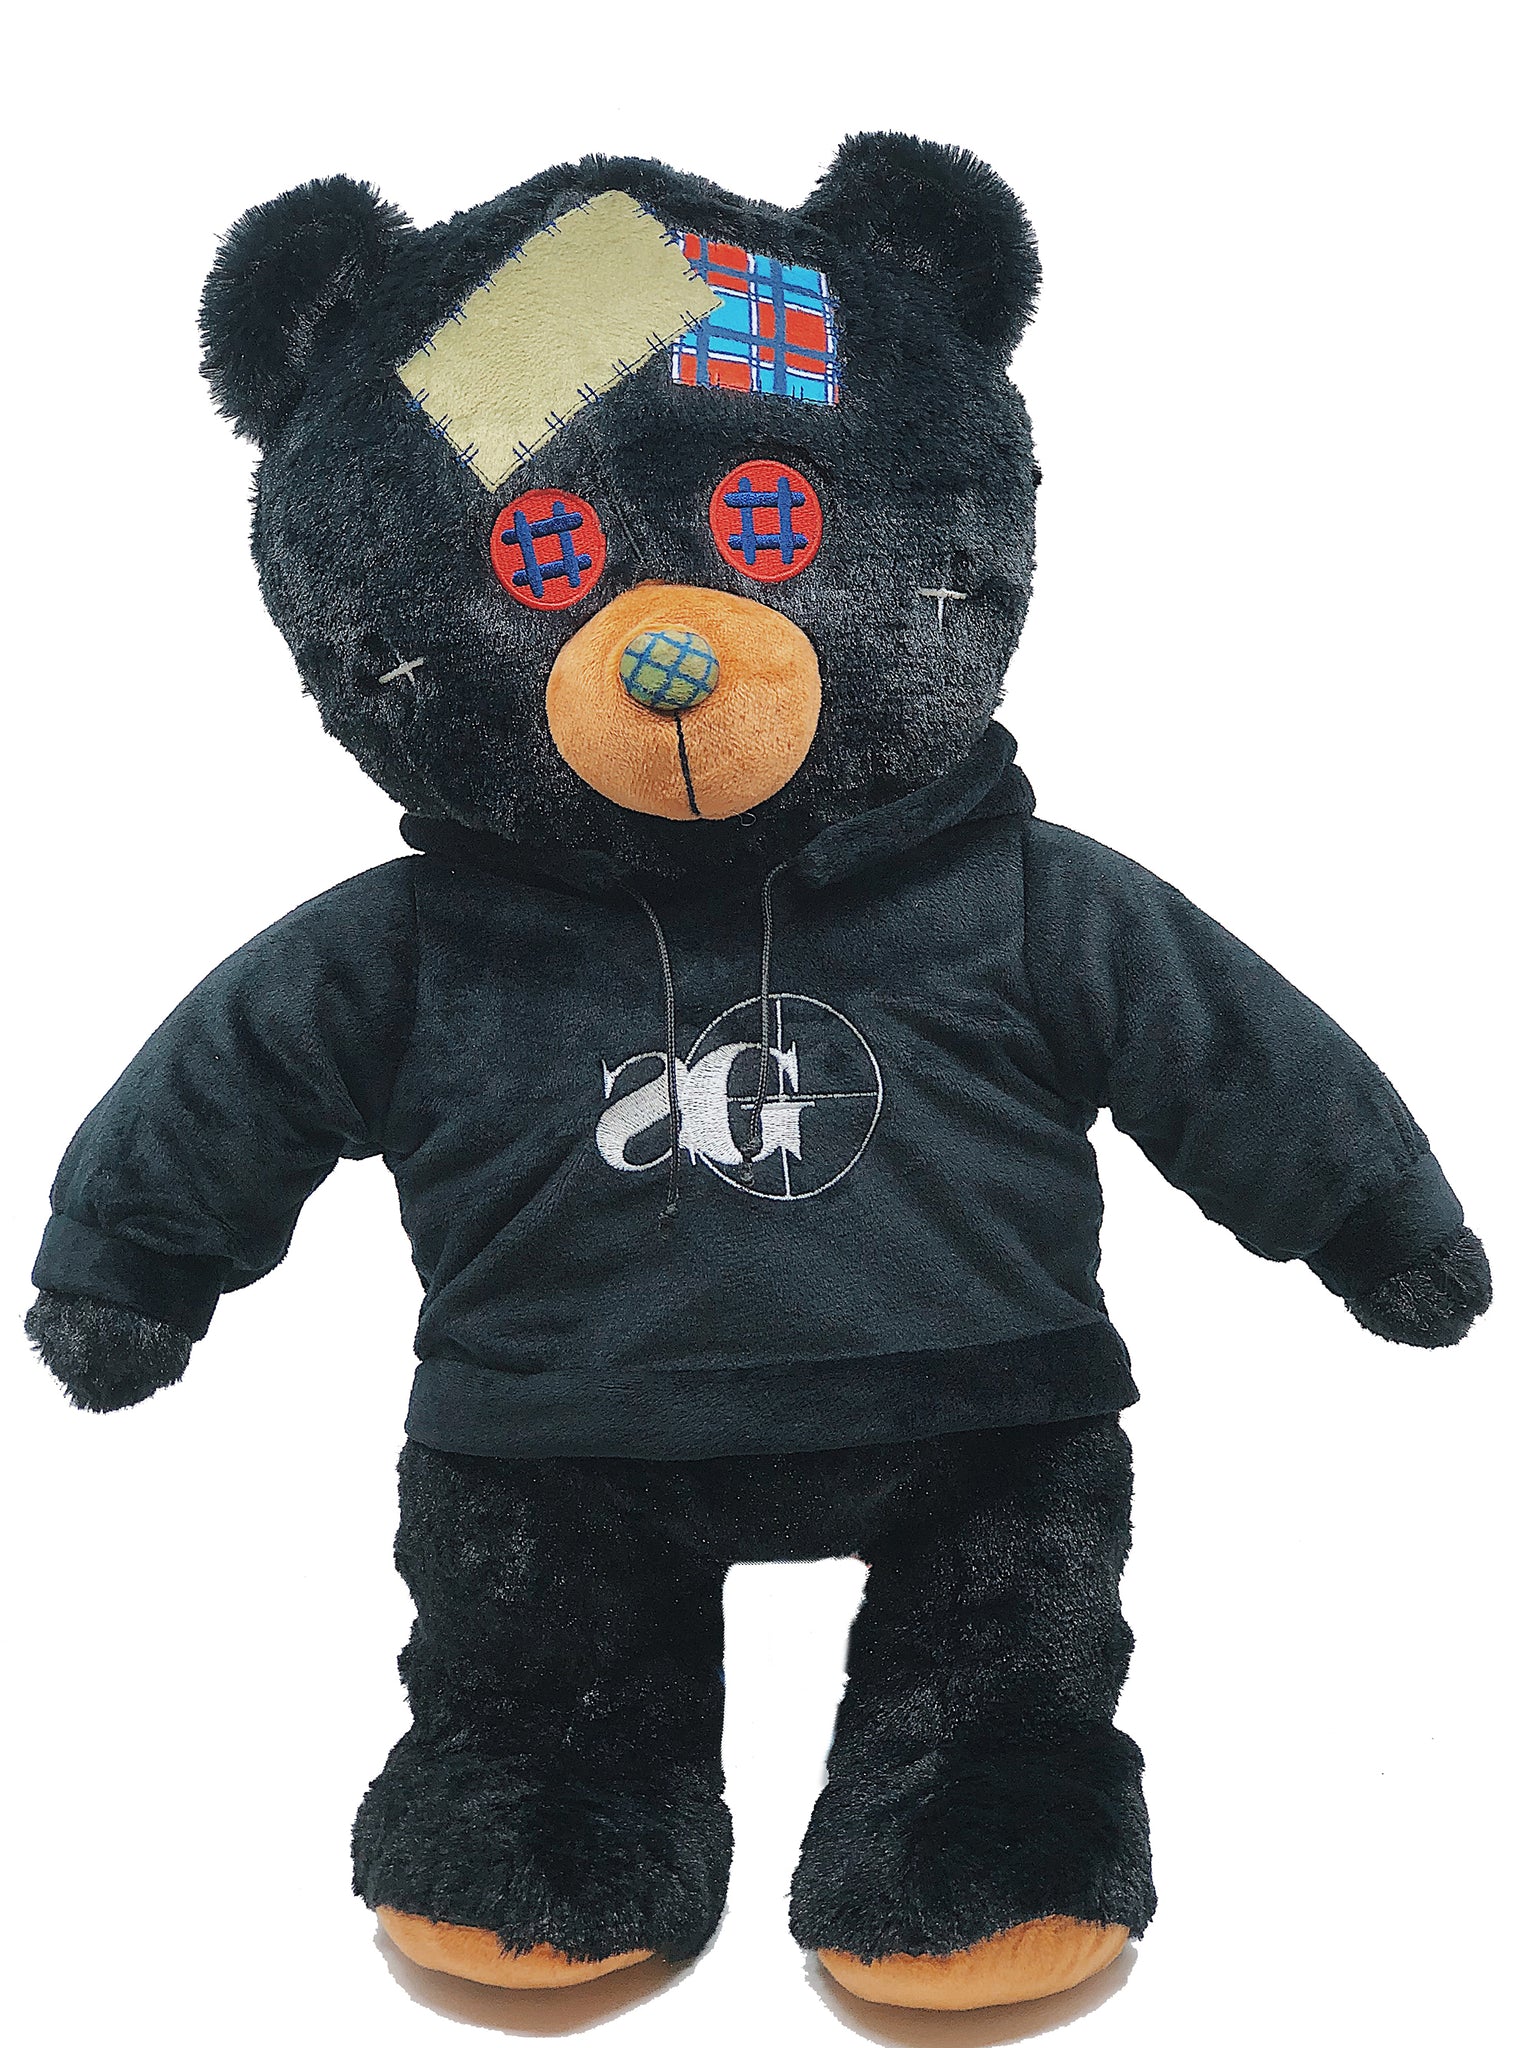 Black Bear Mask Hoodie T Shirt Roblox - black bear mask t shirt roblox